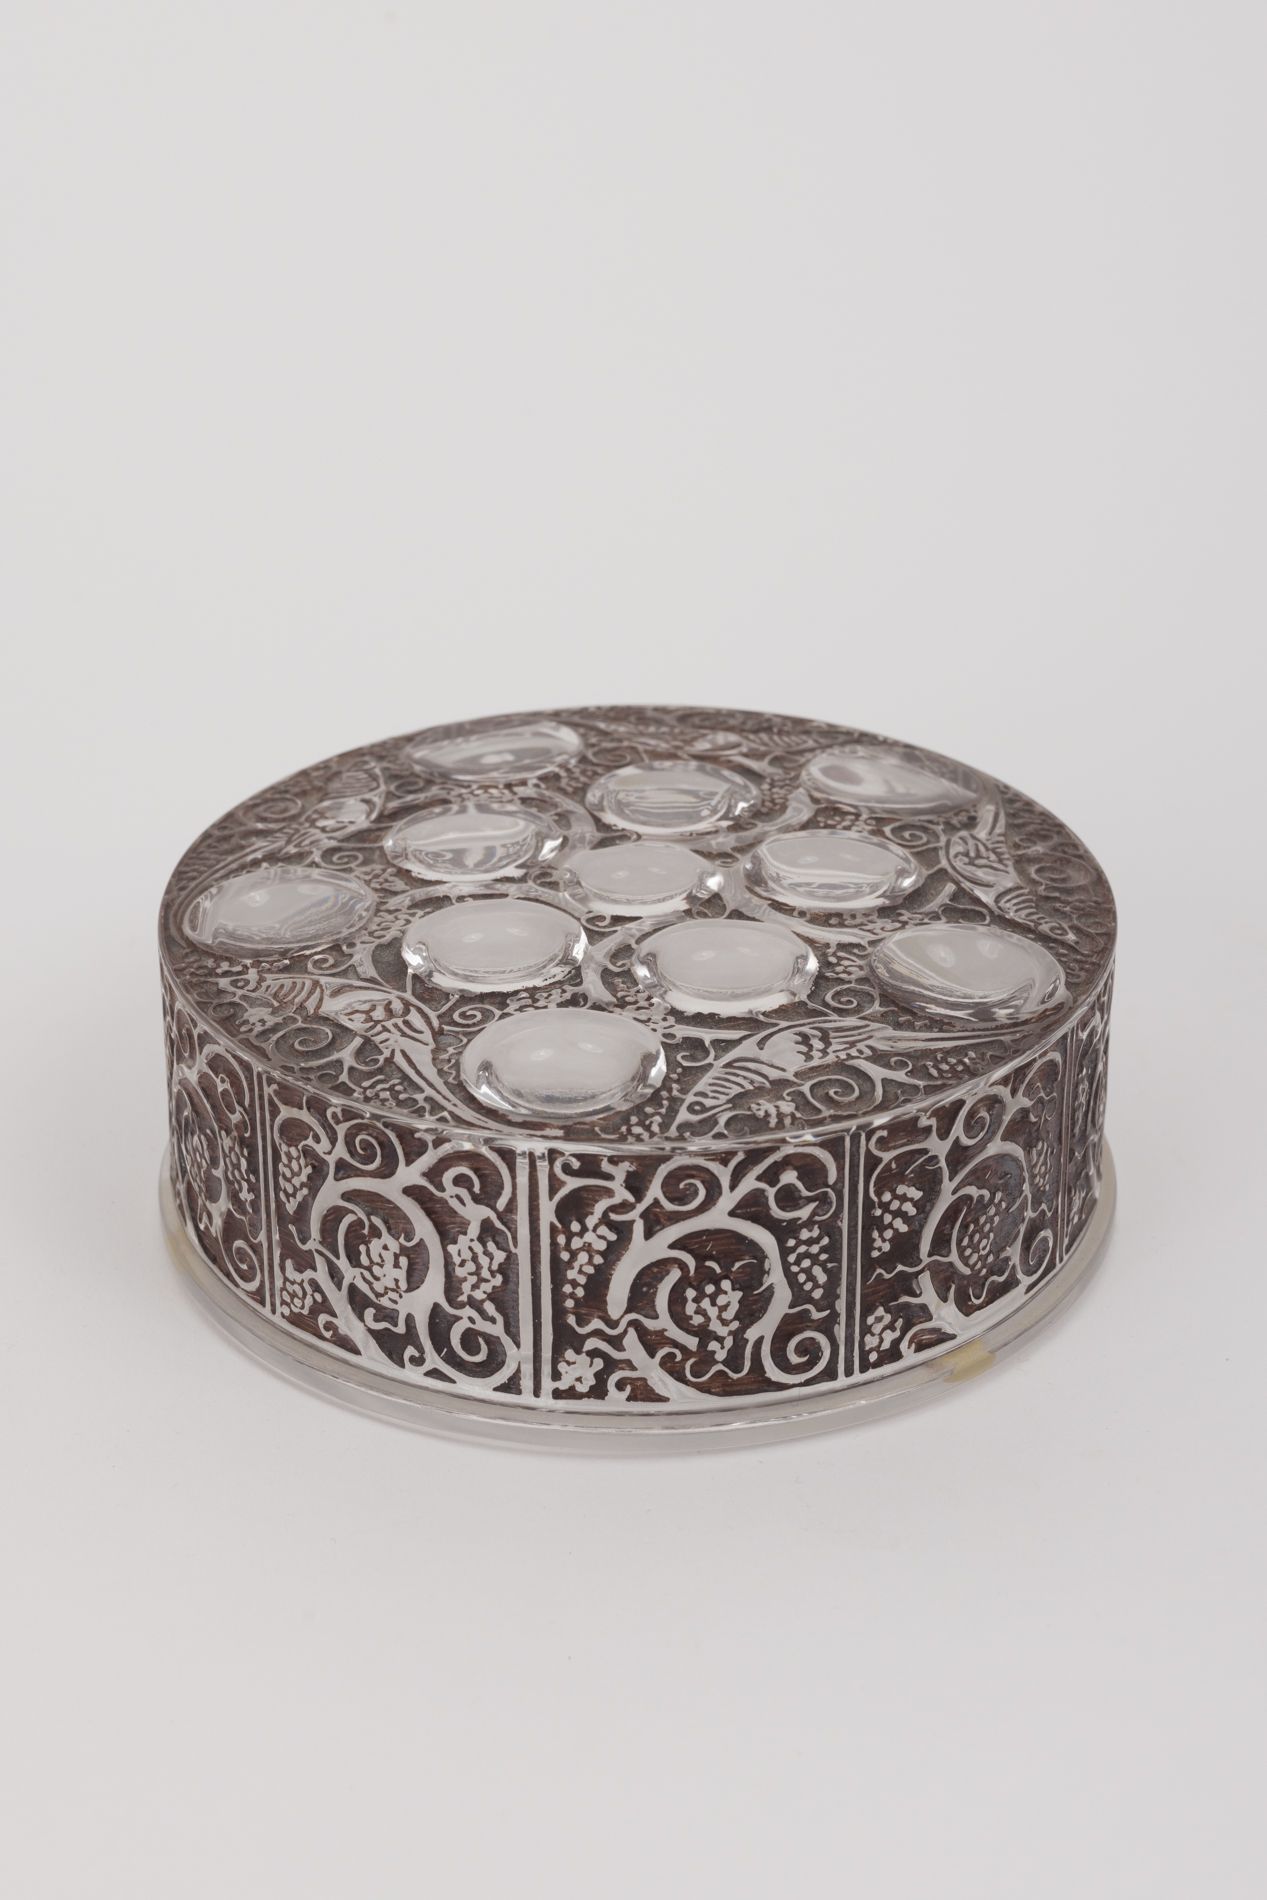 Null LALIQUE 法国 
圆盒 "Roger "模型，压制成型的玻璃，部分上釉，有凸圆形和野鸡装饰。签名为Lalique France。创建于1926年&hellip;